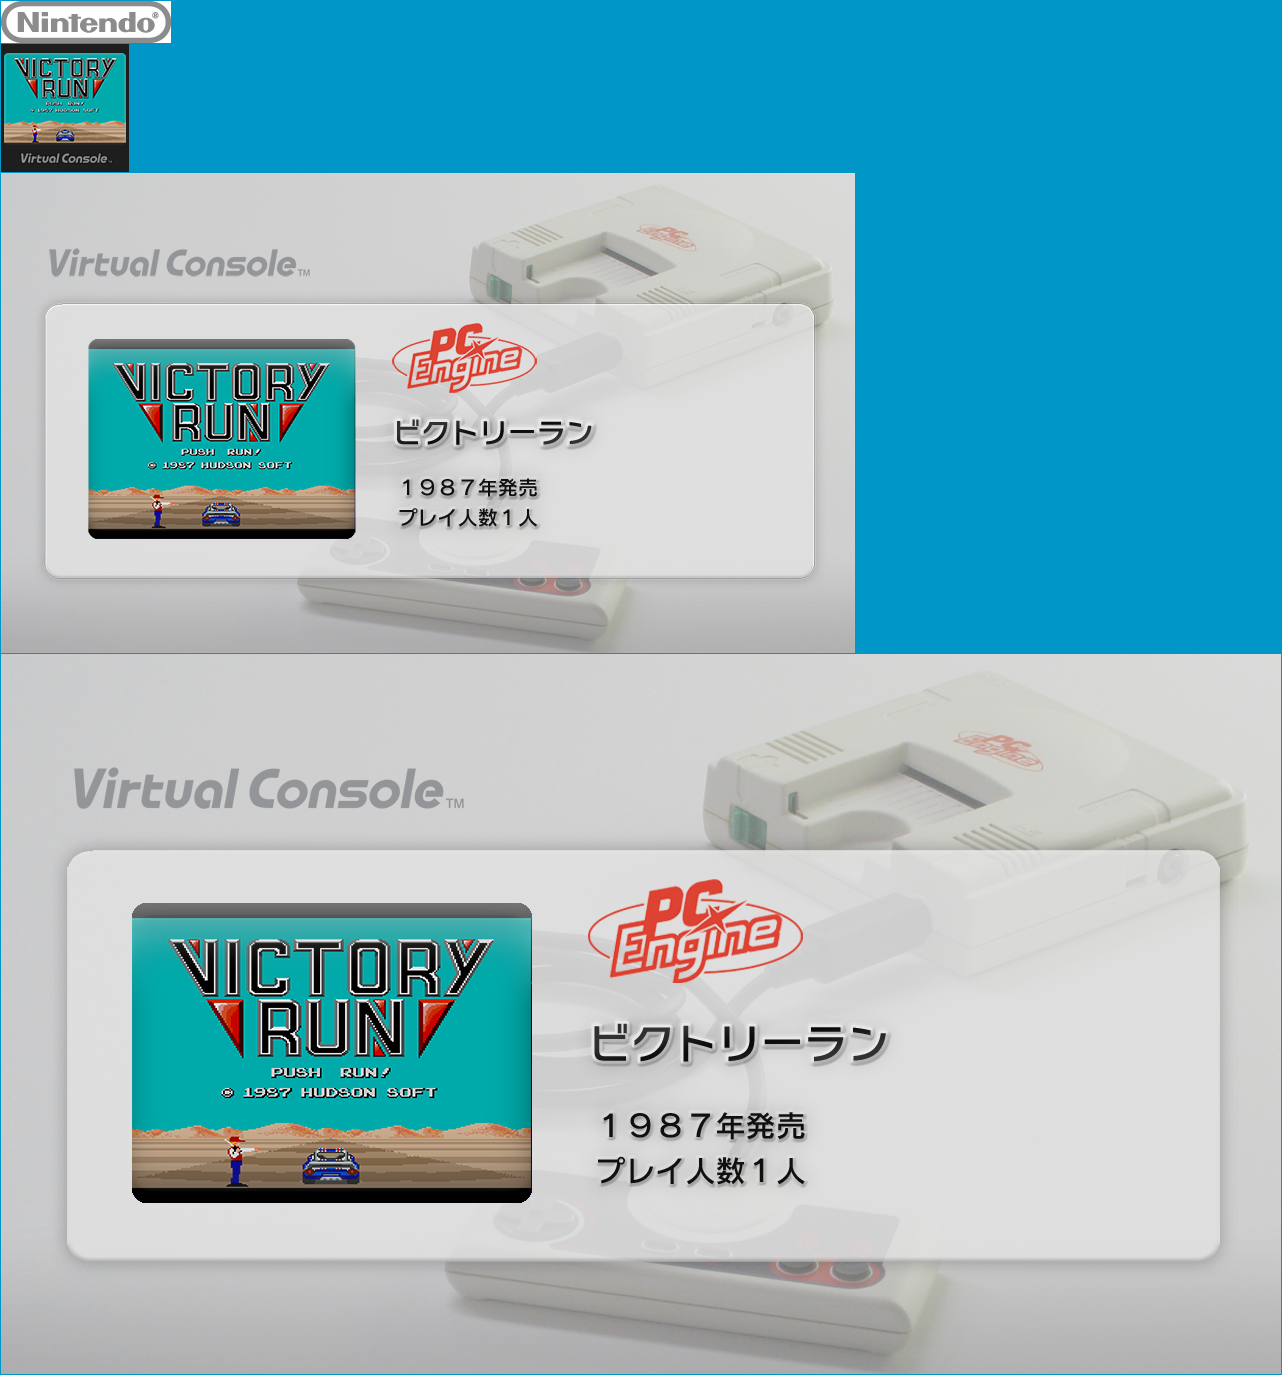 Virtual Console - Victory Run